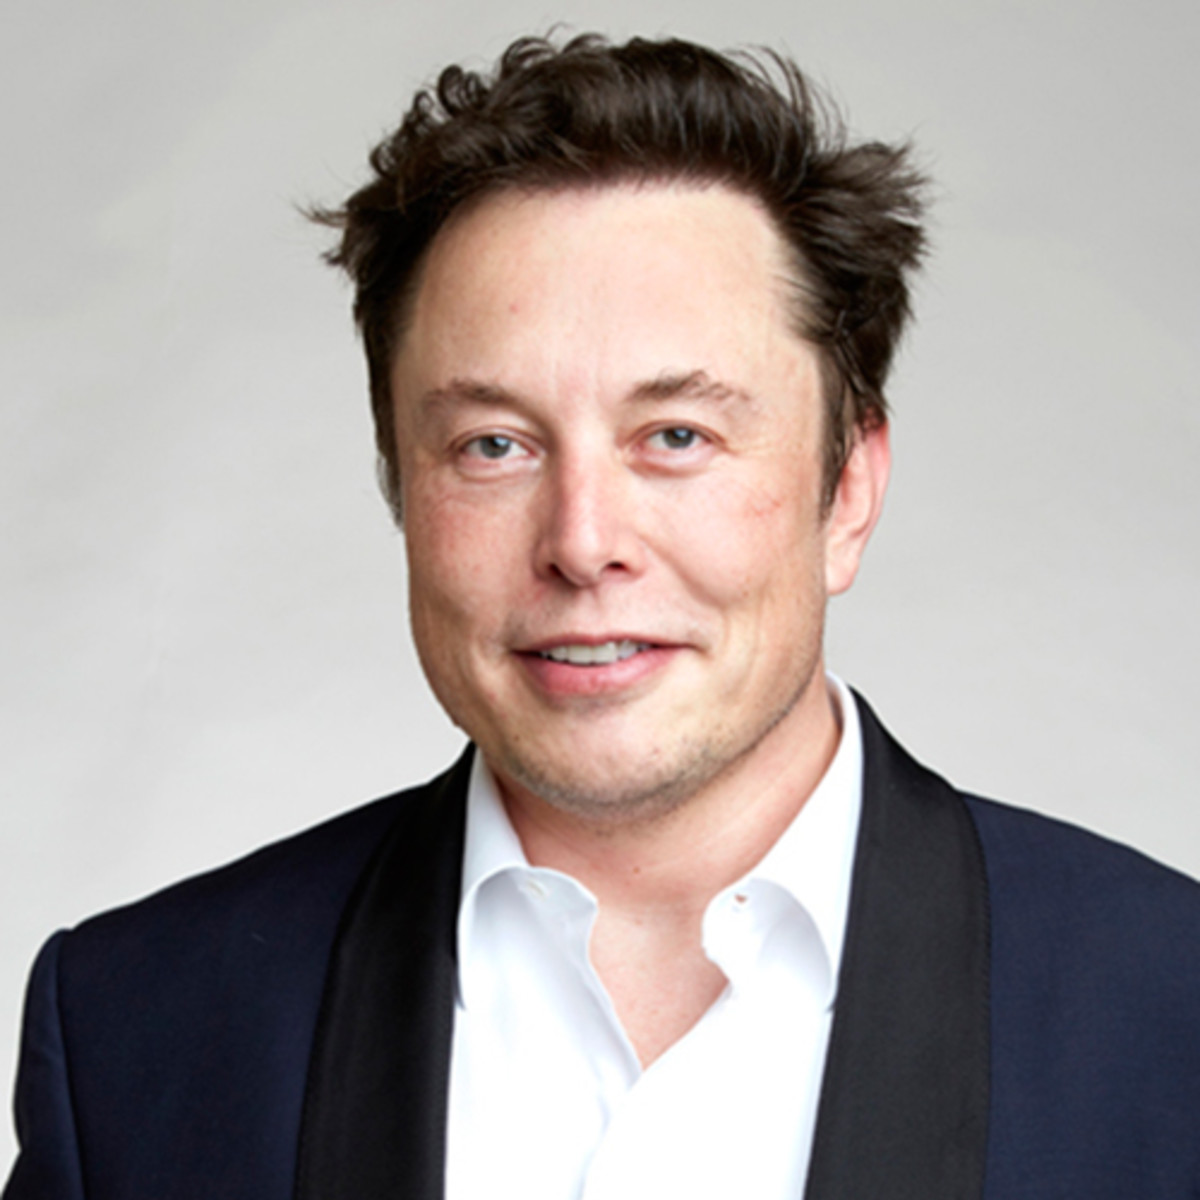 Musk advises CEOs